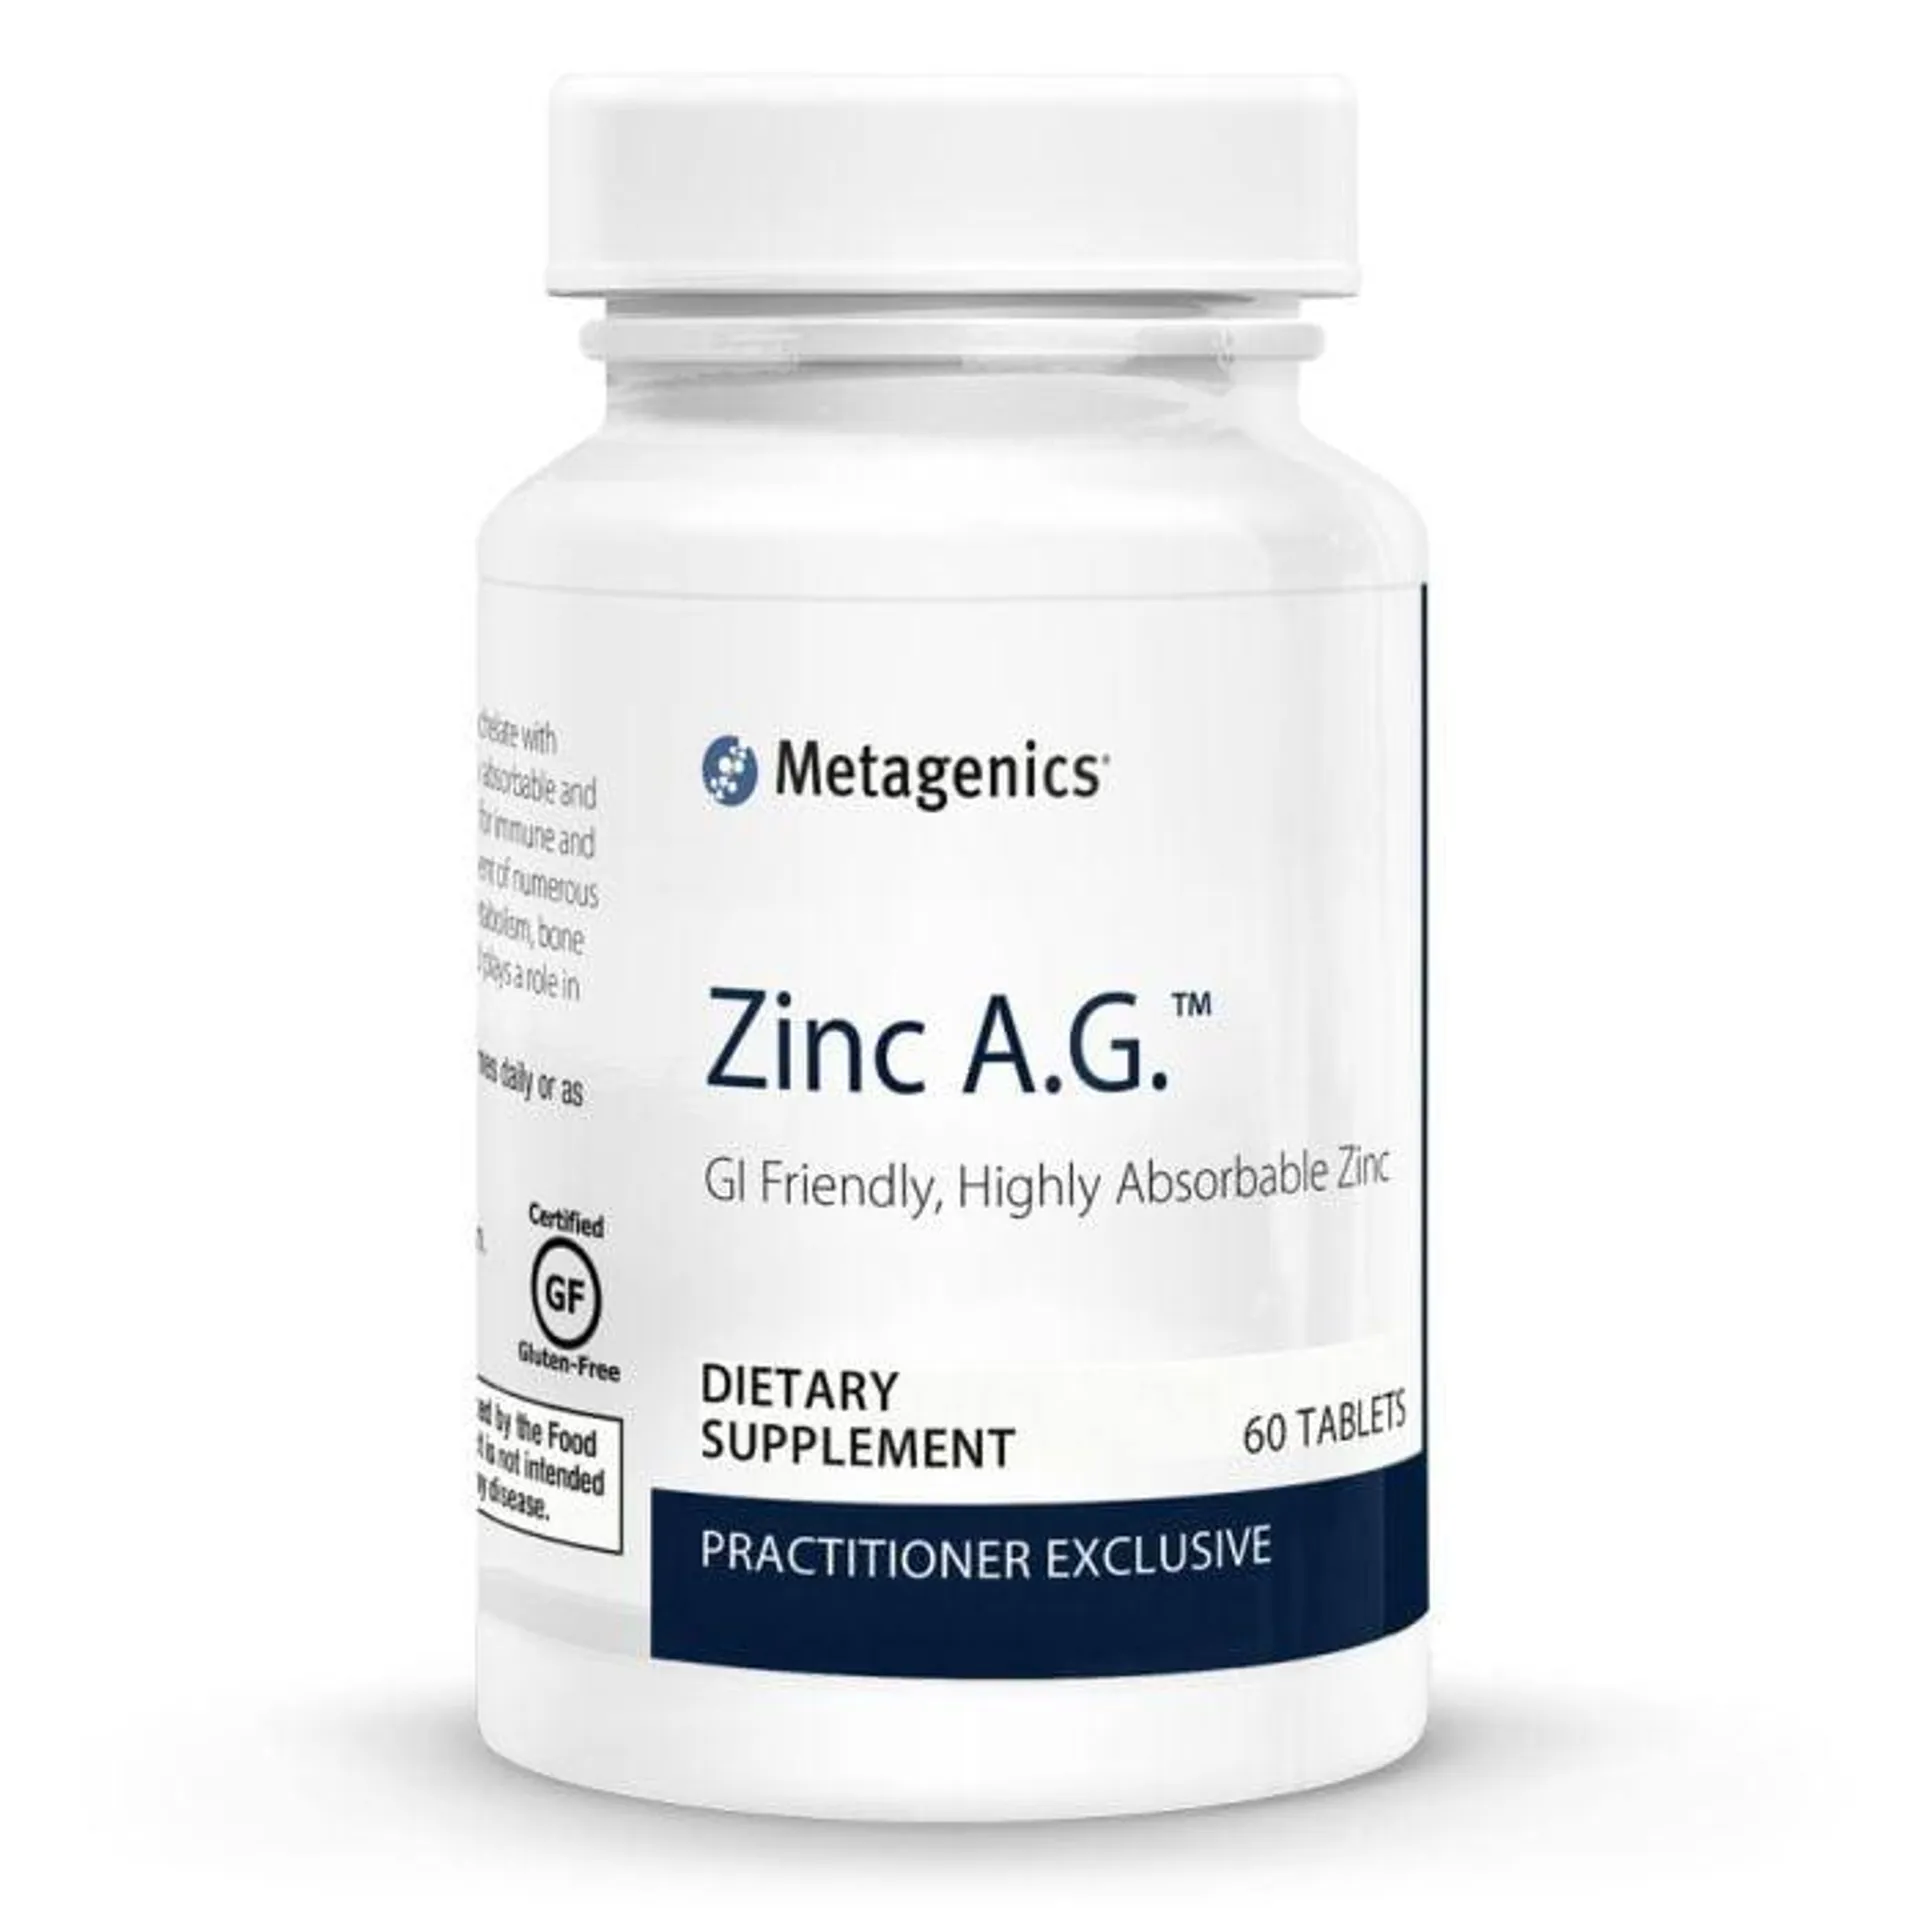 Metagenics - Zinc AG 60s